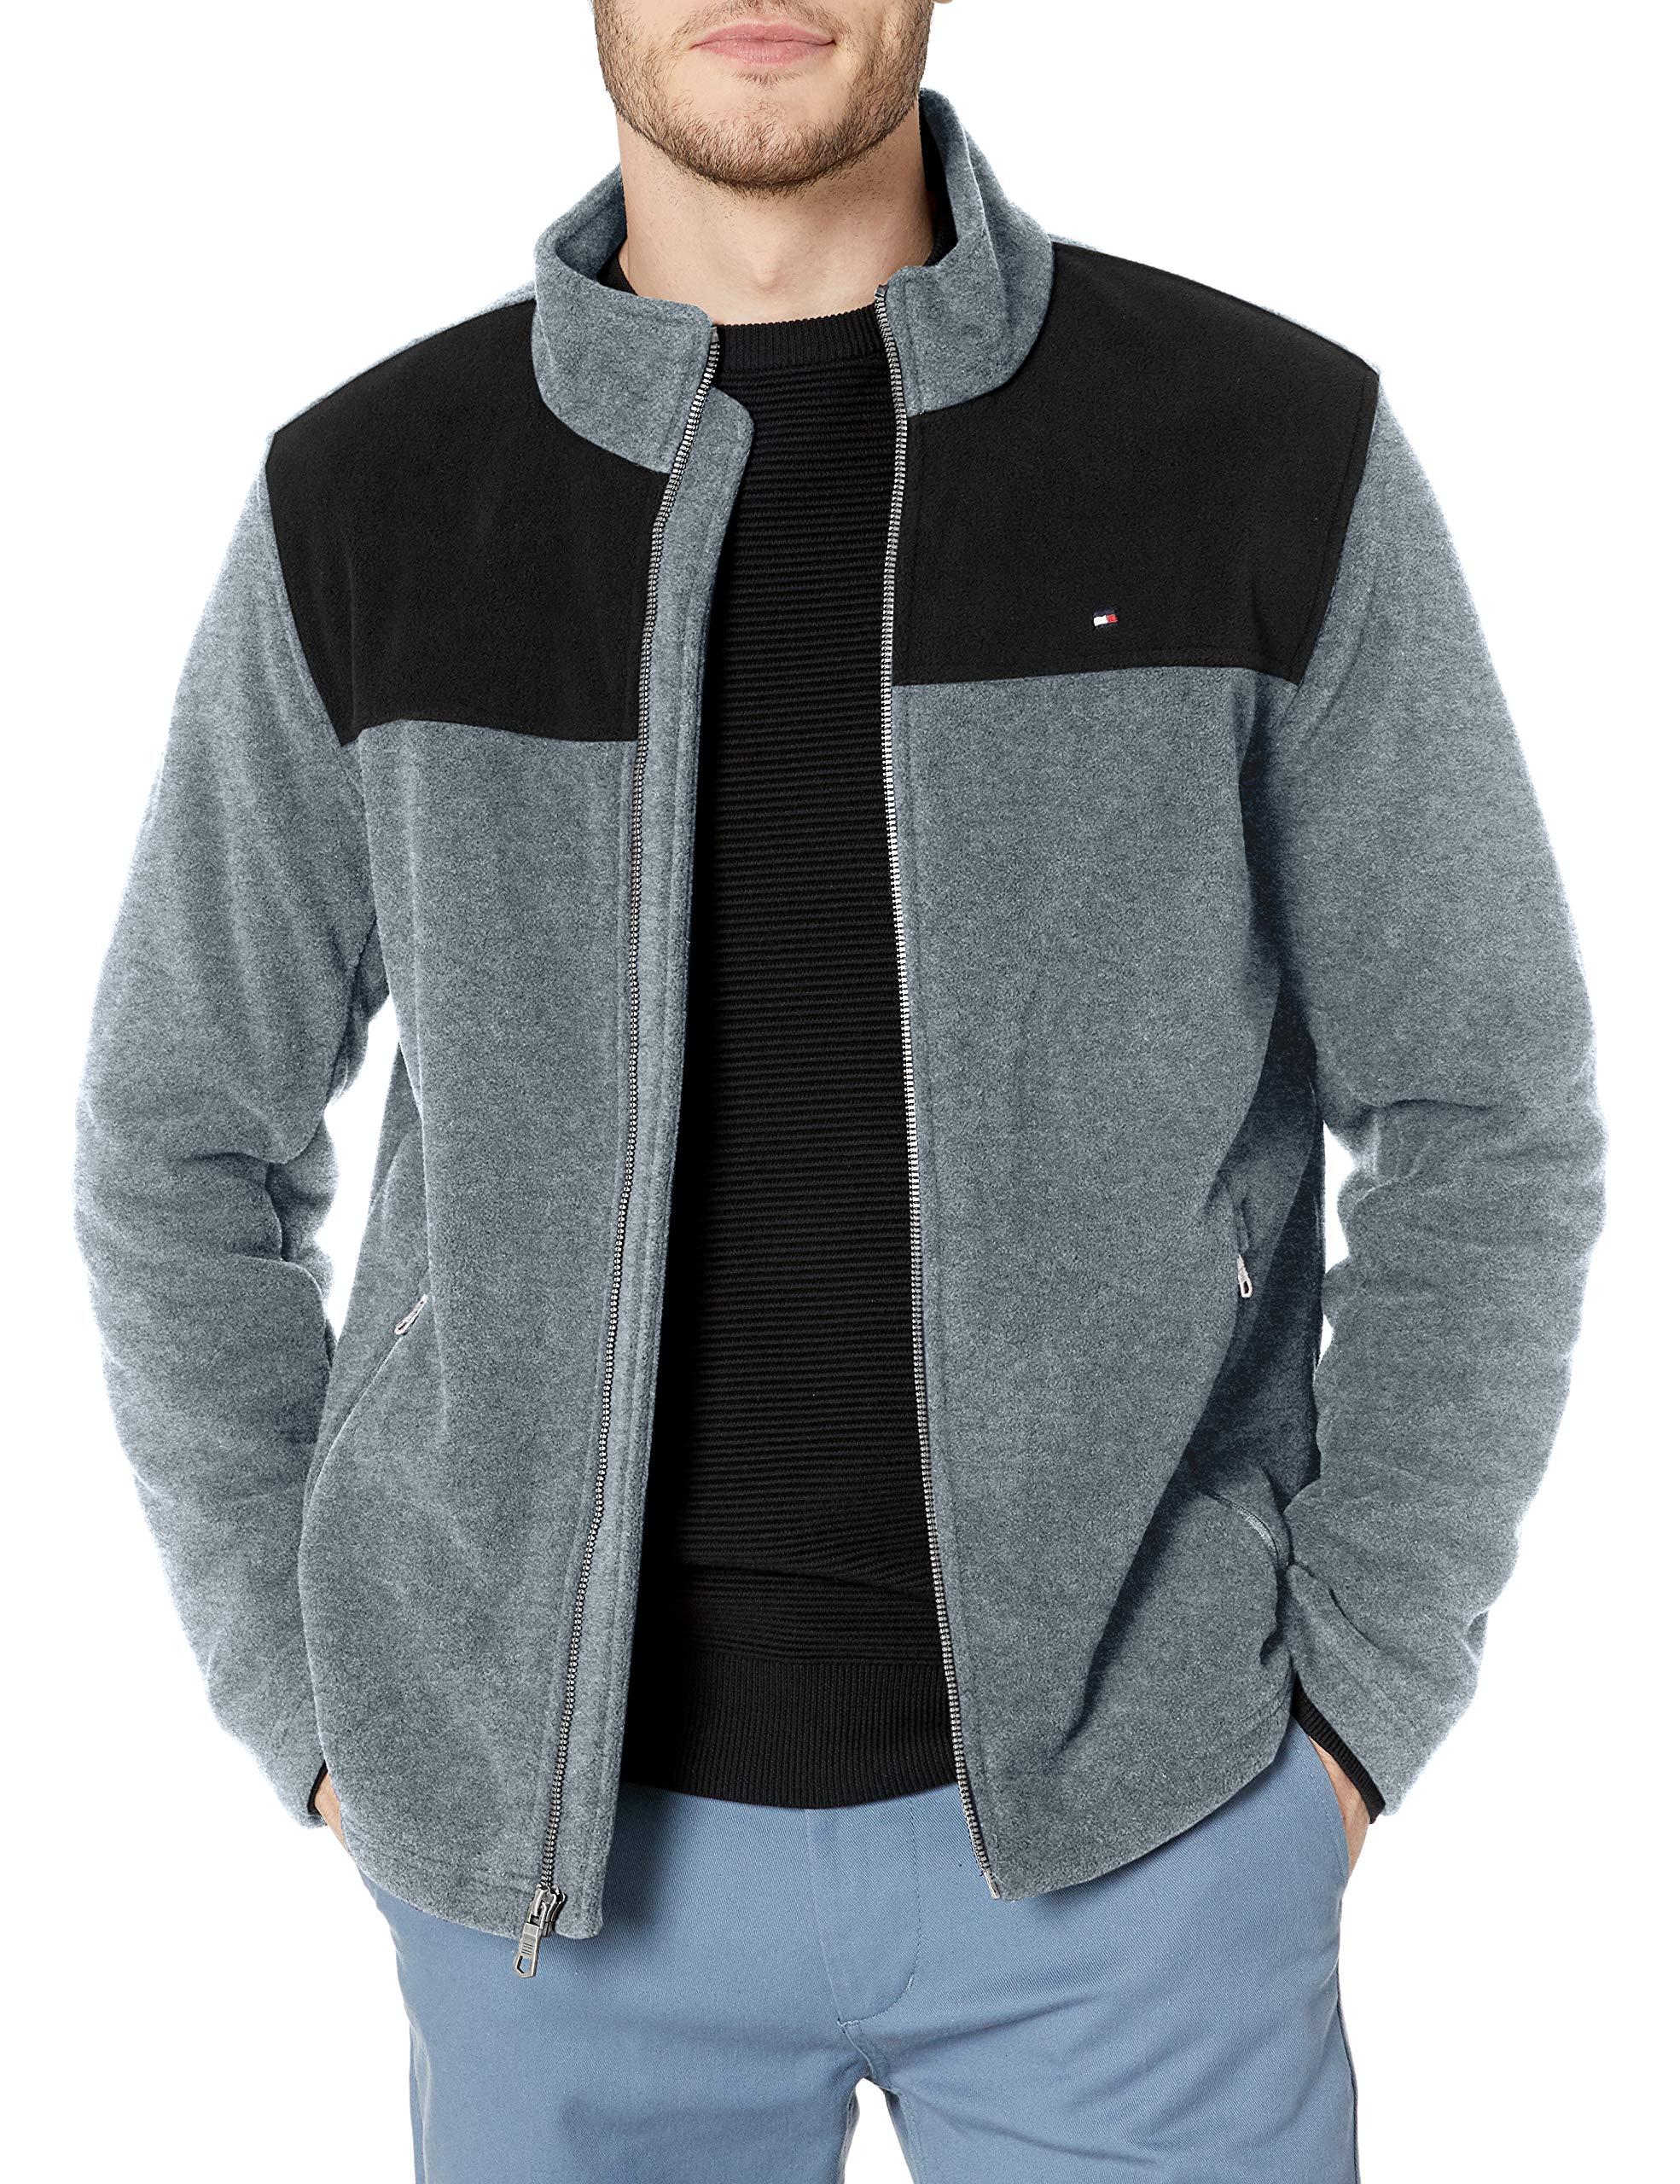 hilfiger fleece jacket